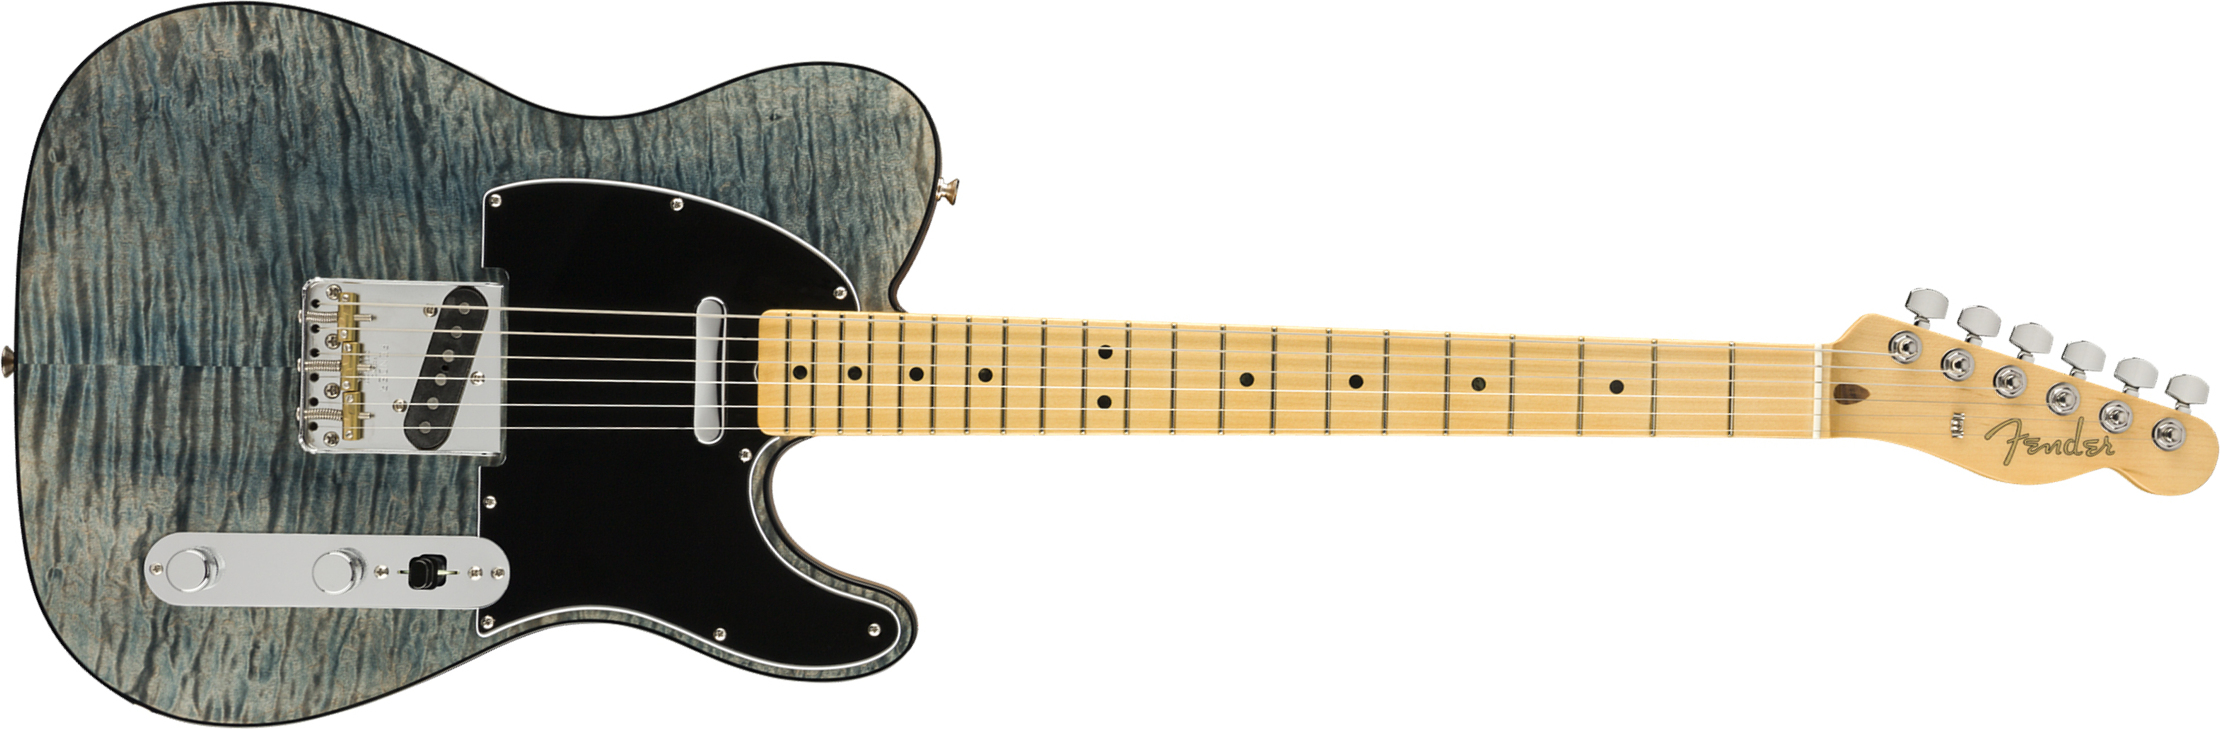 Fender Tele Quilt Maple Top Rarities Usa Mn - Blue Cloud - Tel shape electric guitar - Main picture